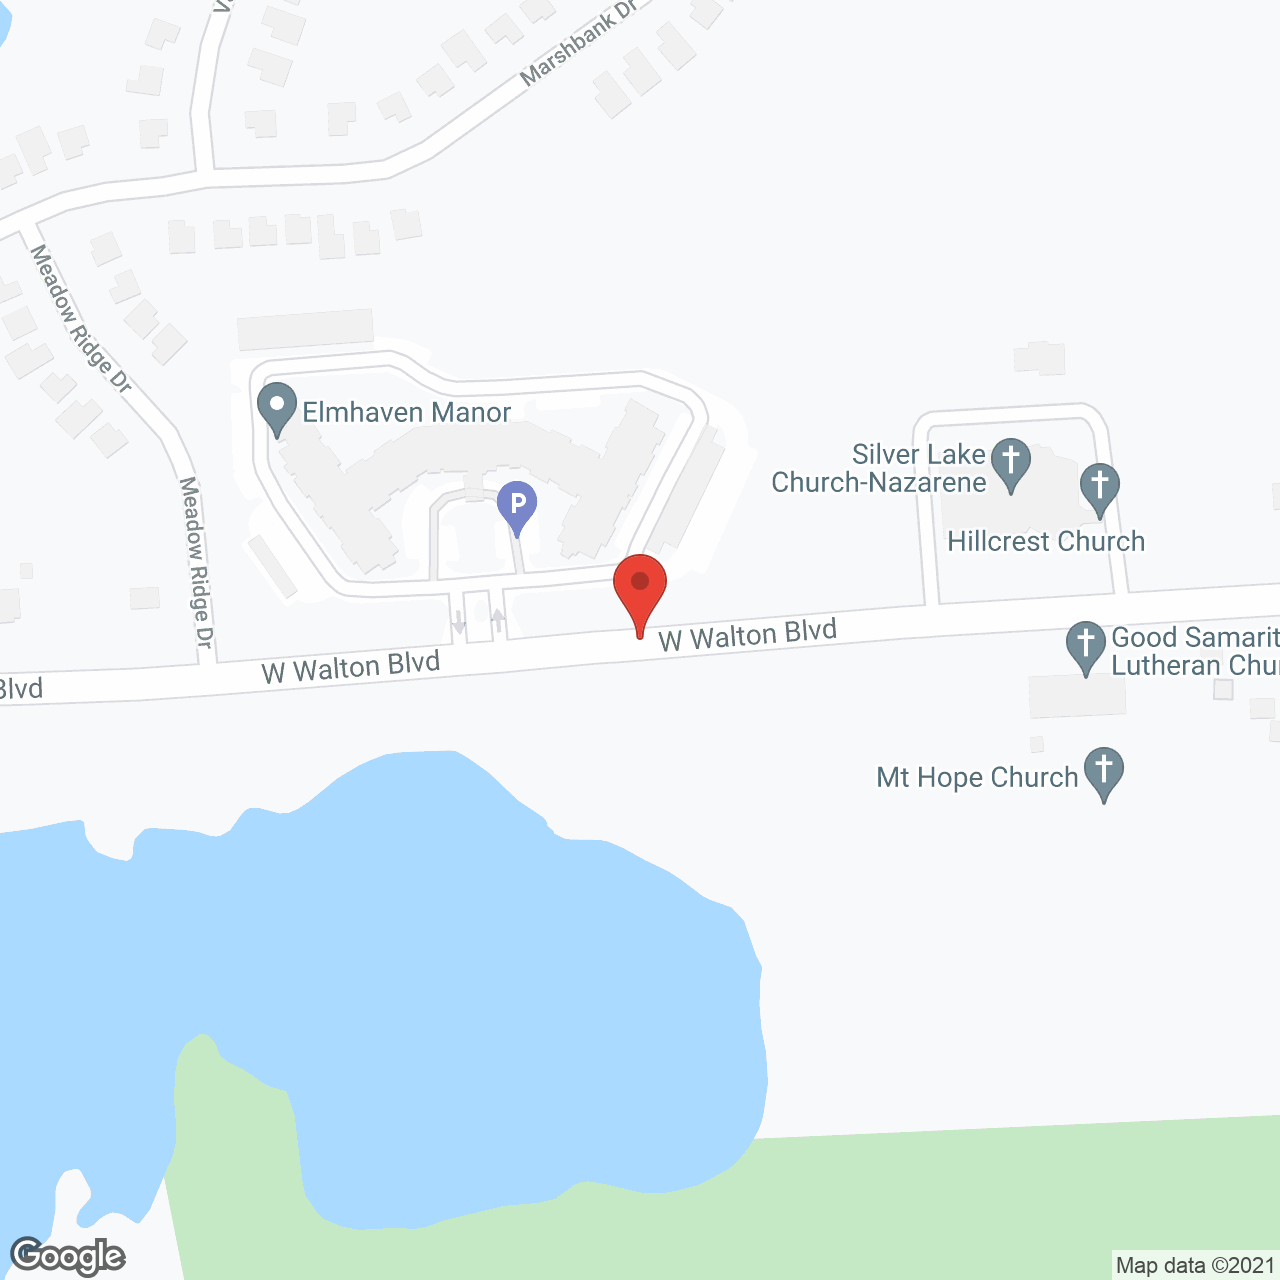 Elmhaven Manor in google map